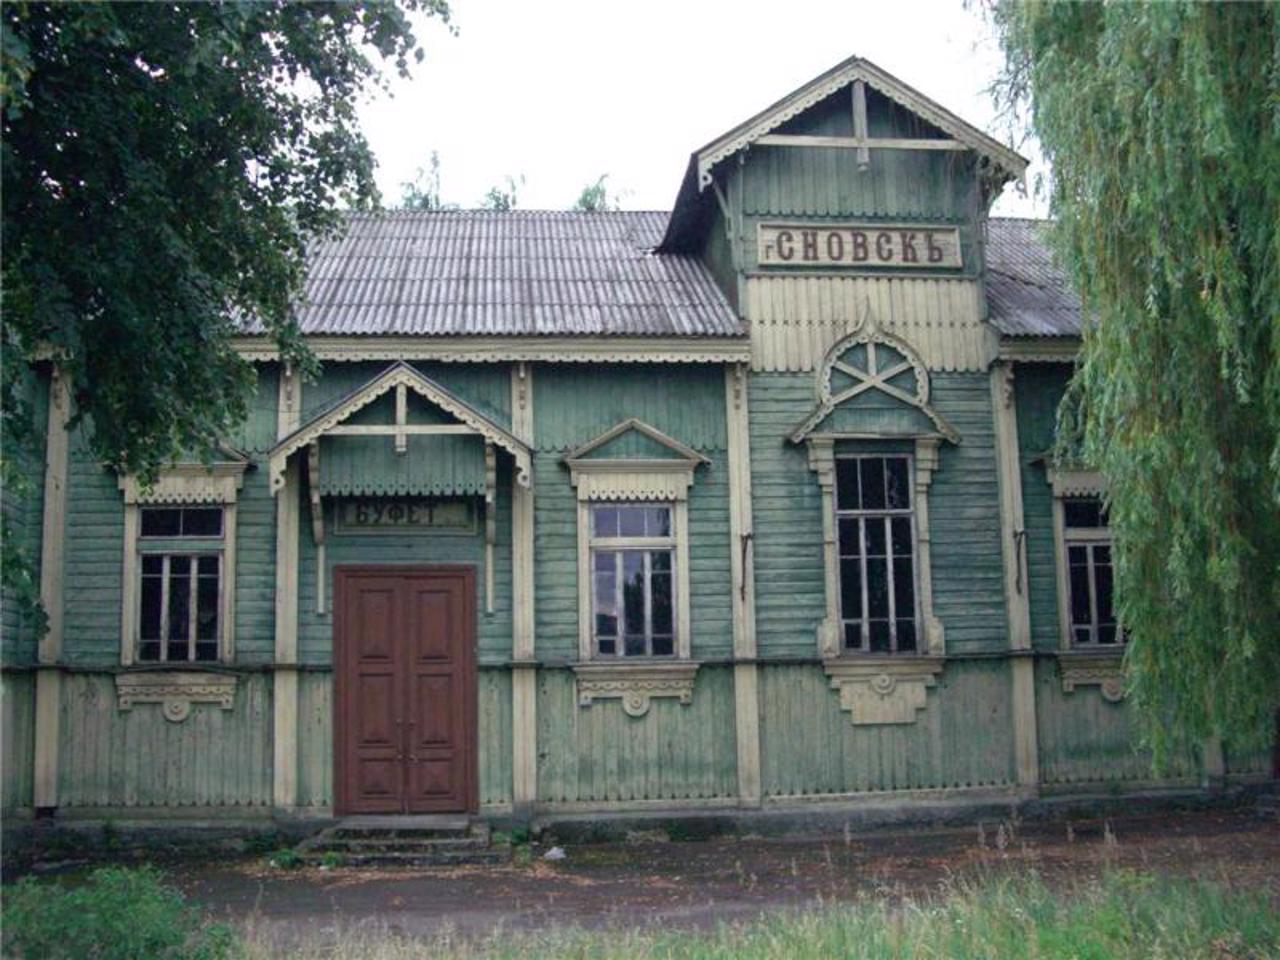 Railwaymen's Club, Snovsk